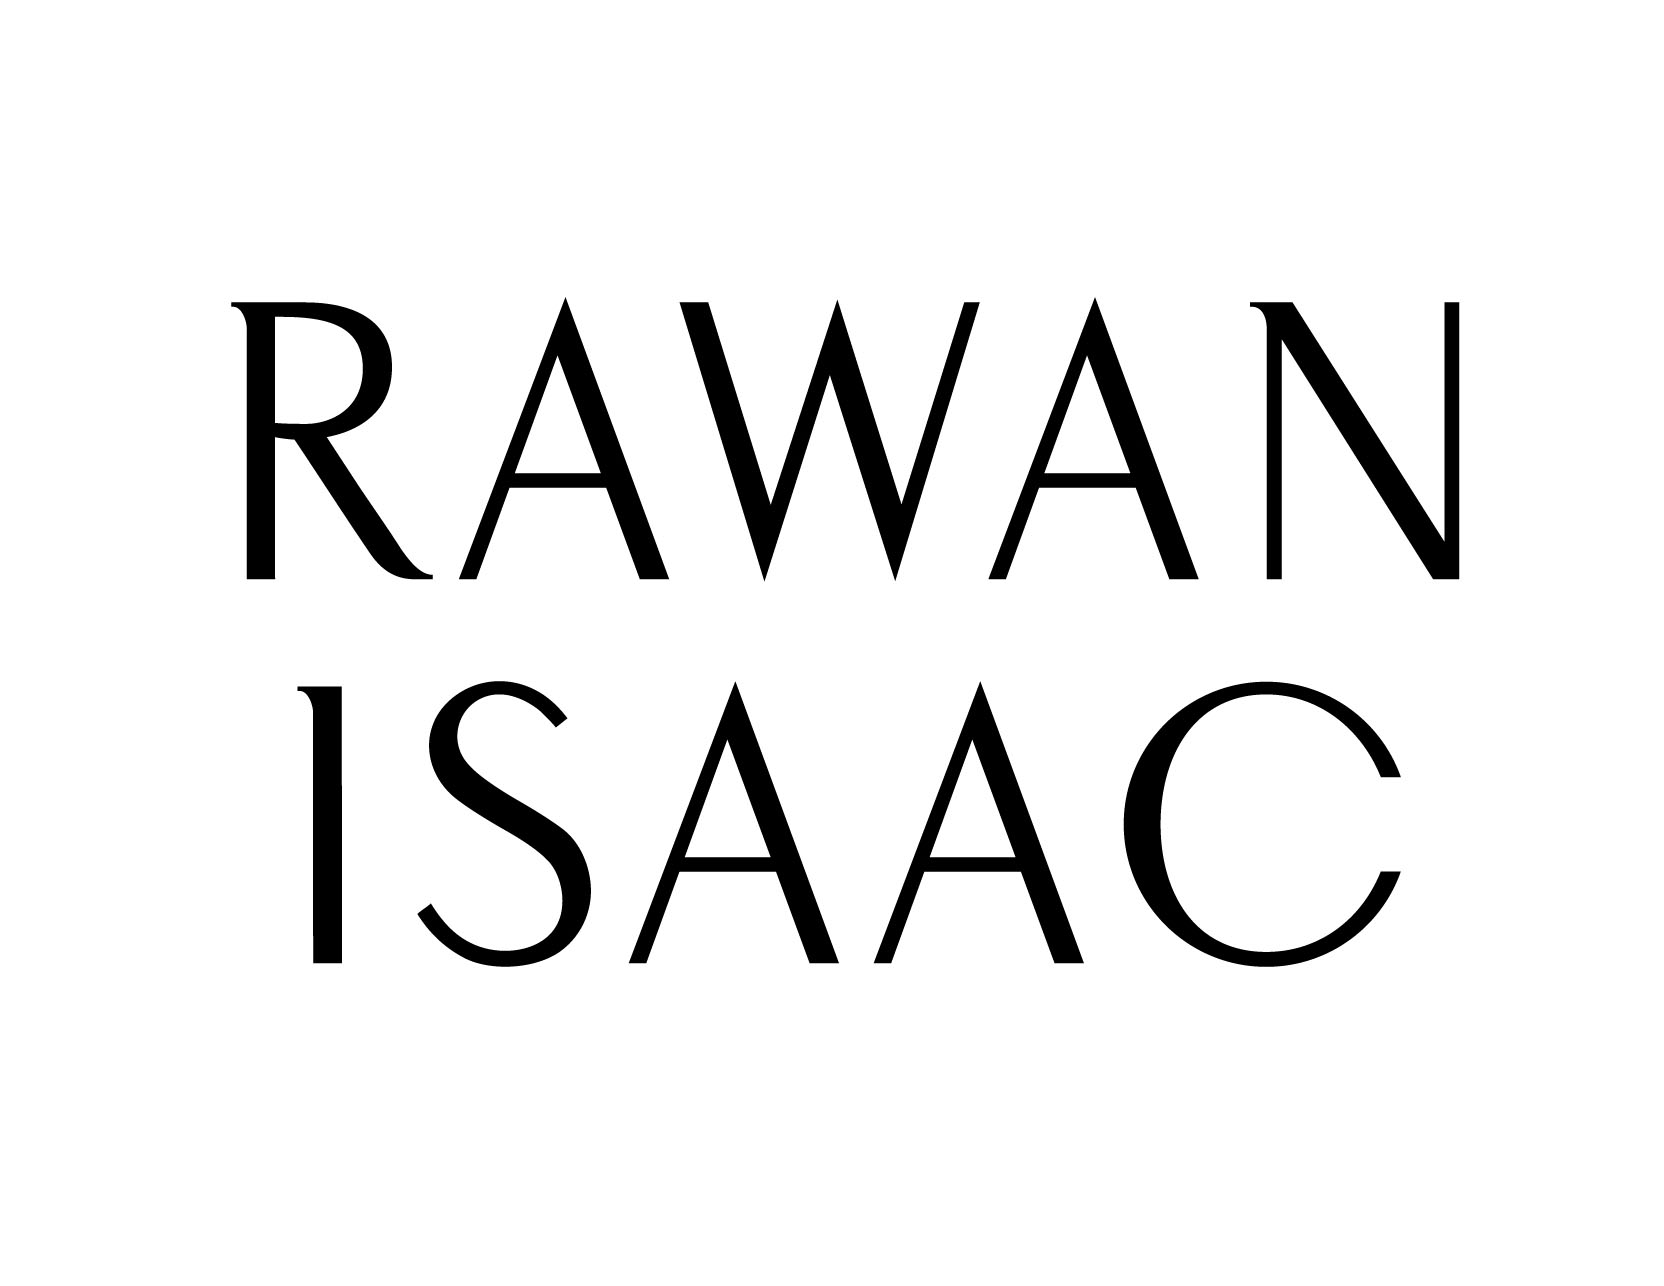 Rawan Isaac